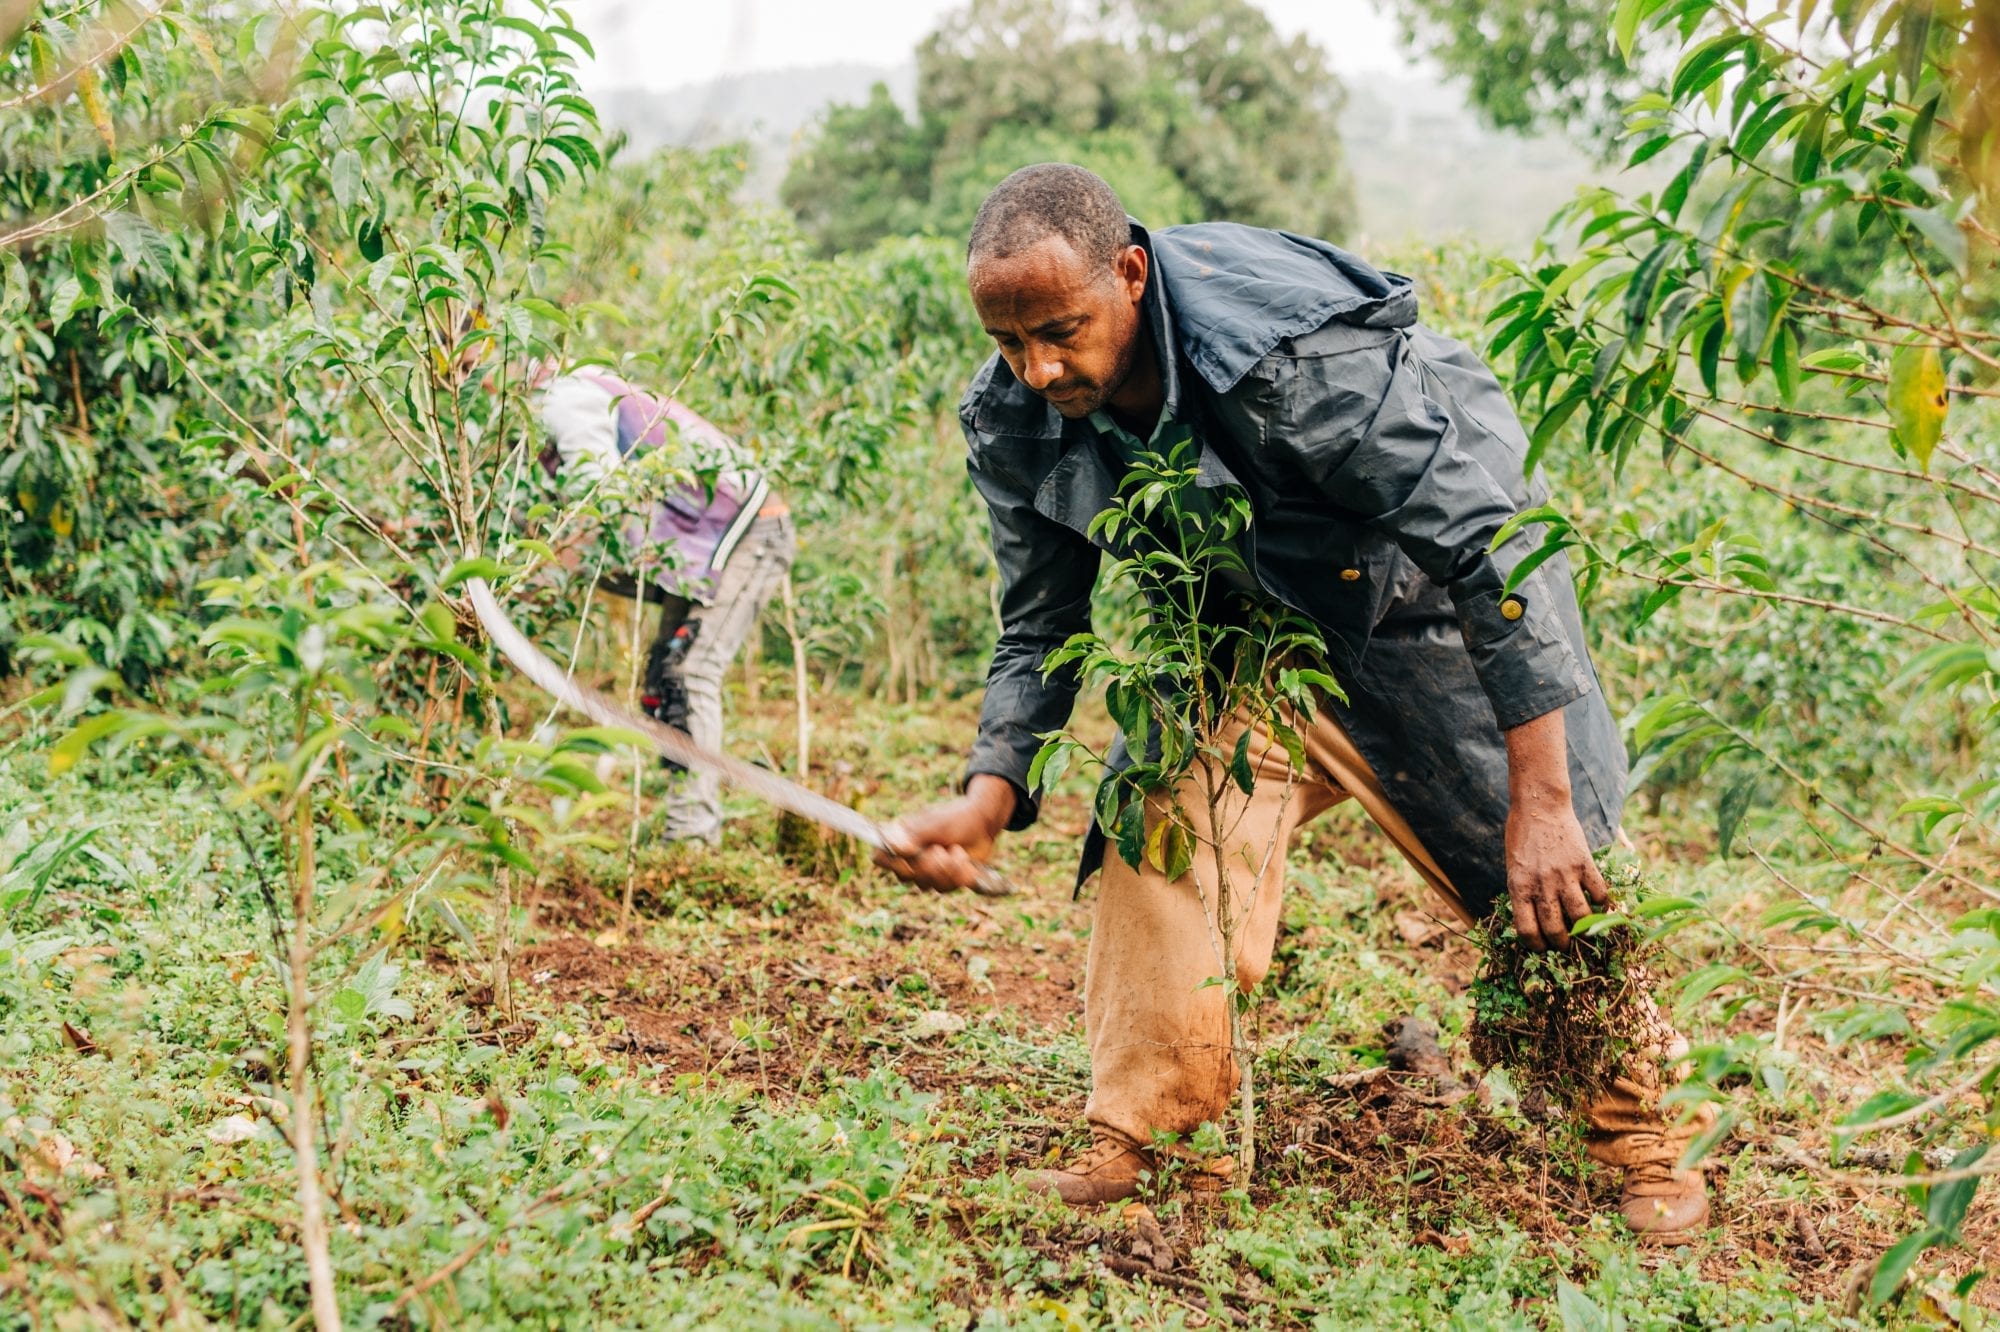 A coffee farmer in Ethiopia tends to his farm